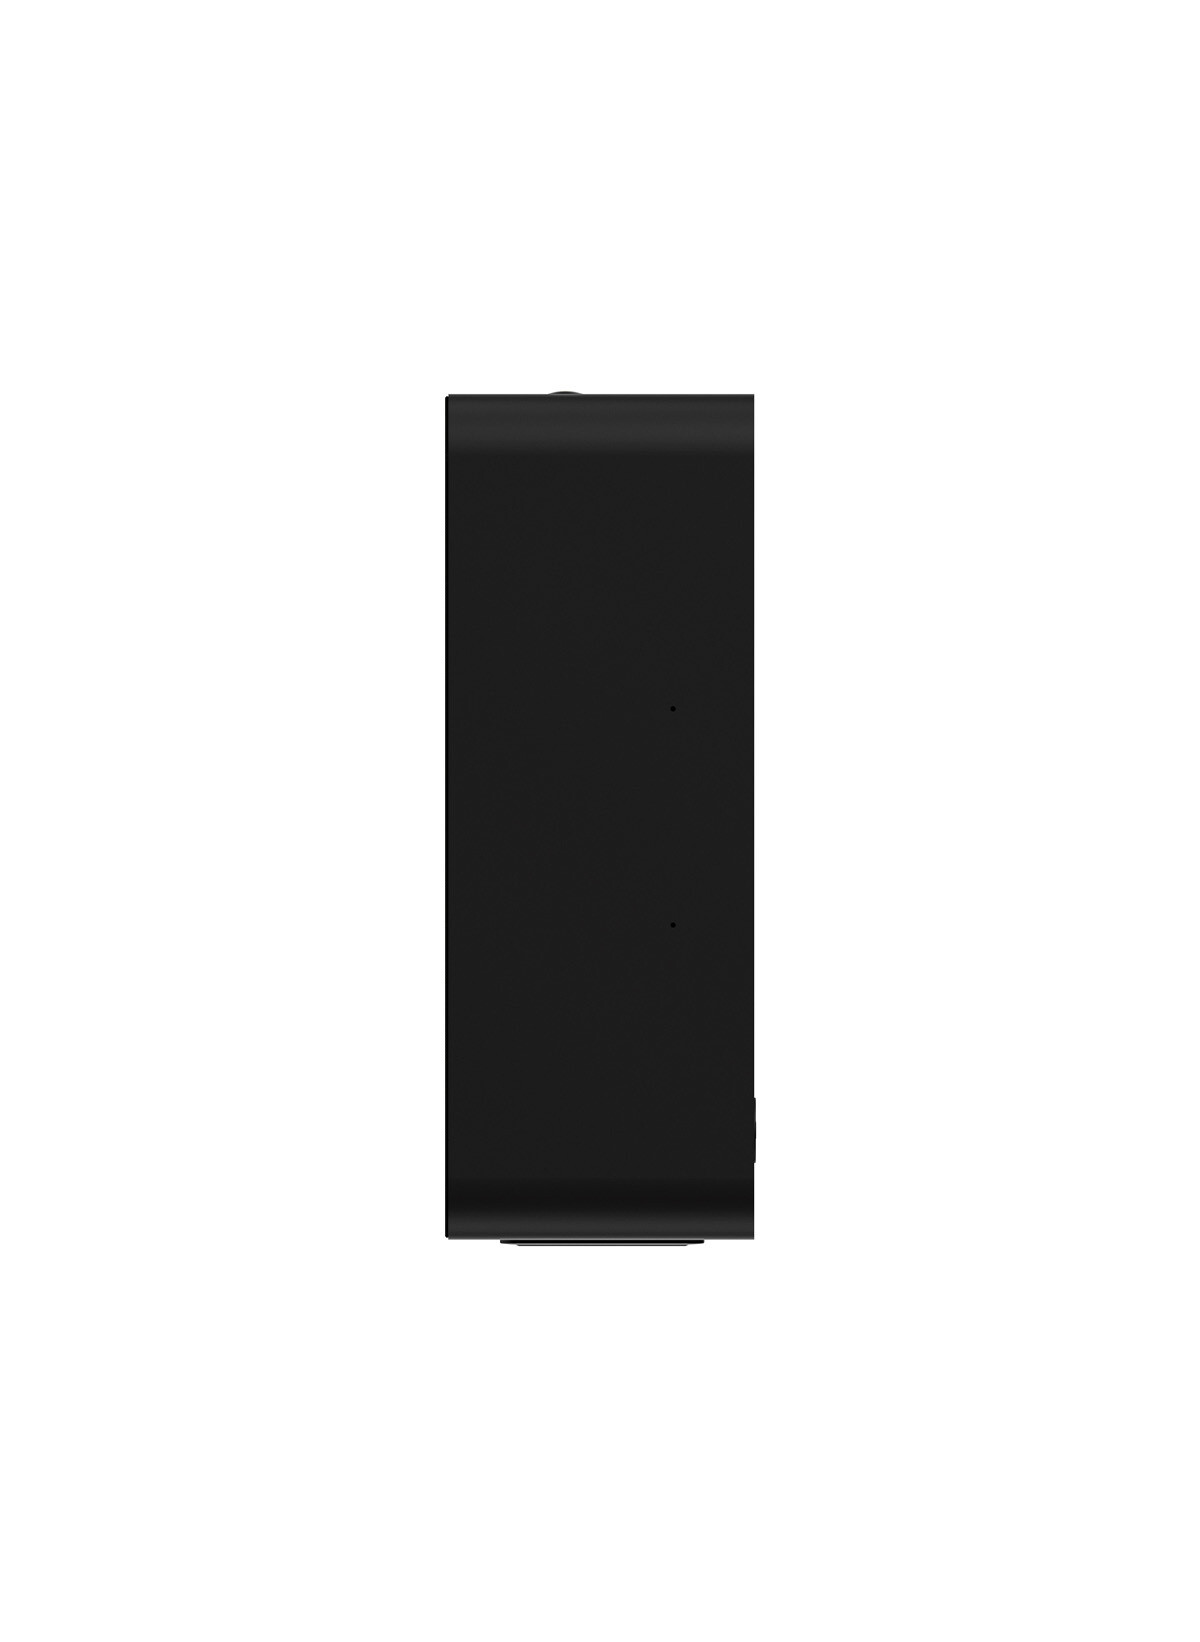 Braun-Audio-LE01-Stereolautsprecher-schwarz